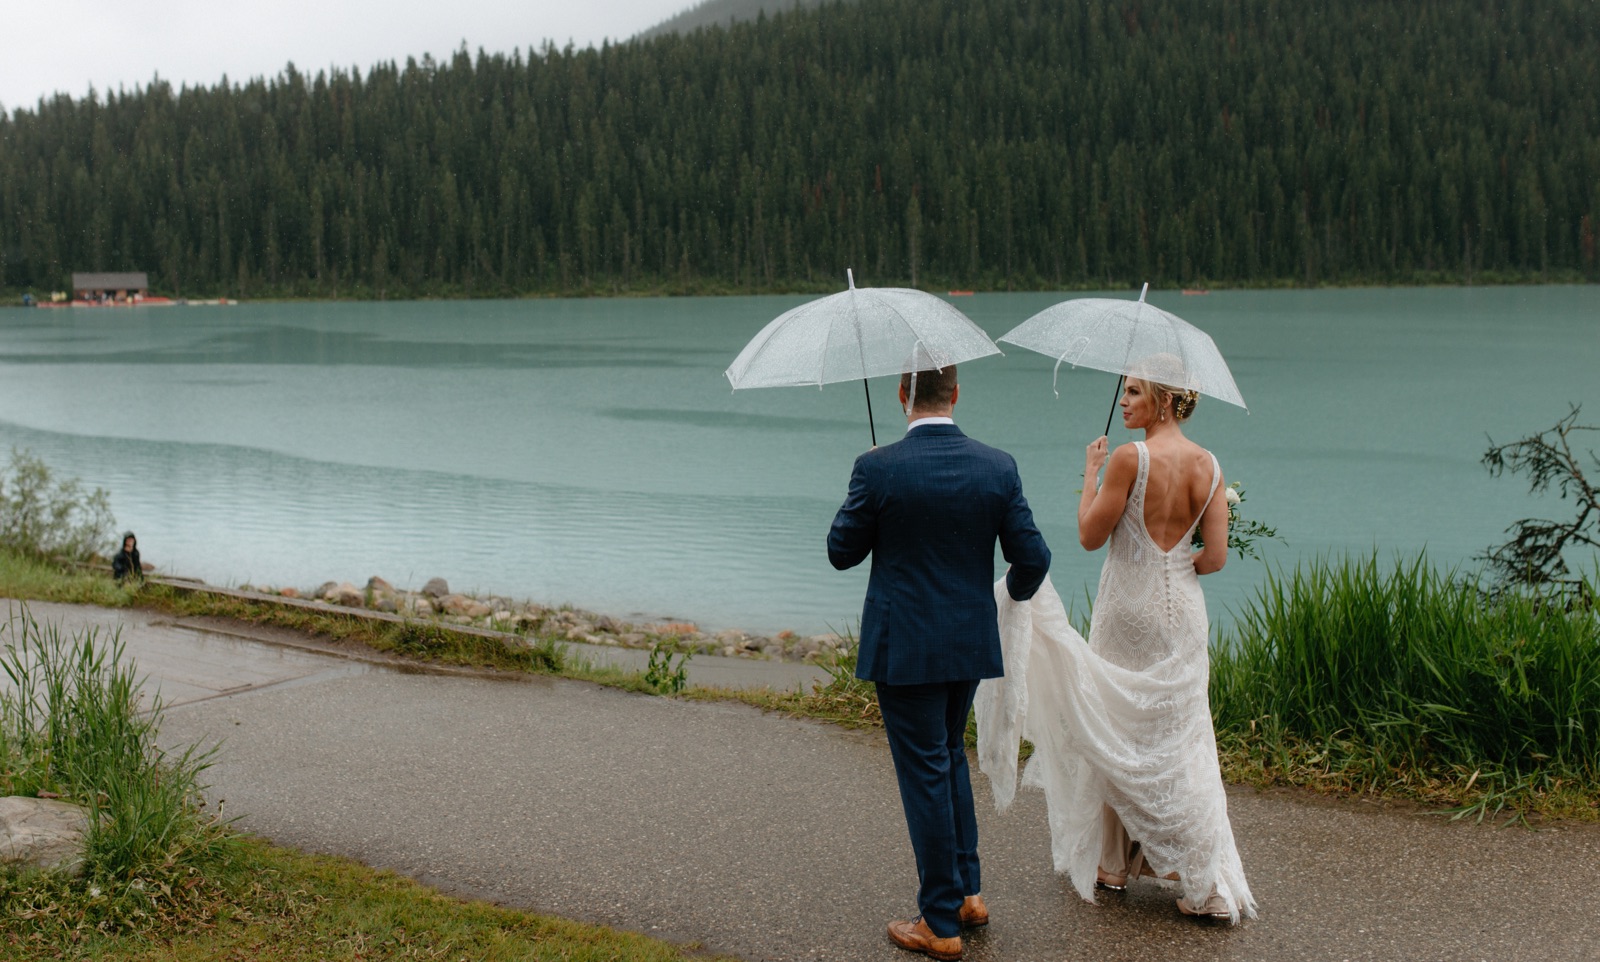 Rainy Lake Louise wedding inspiration with clear umbrellas